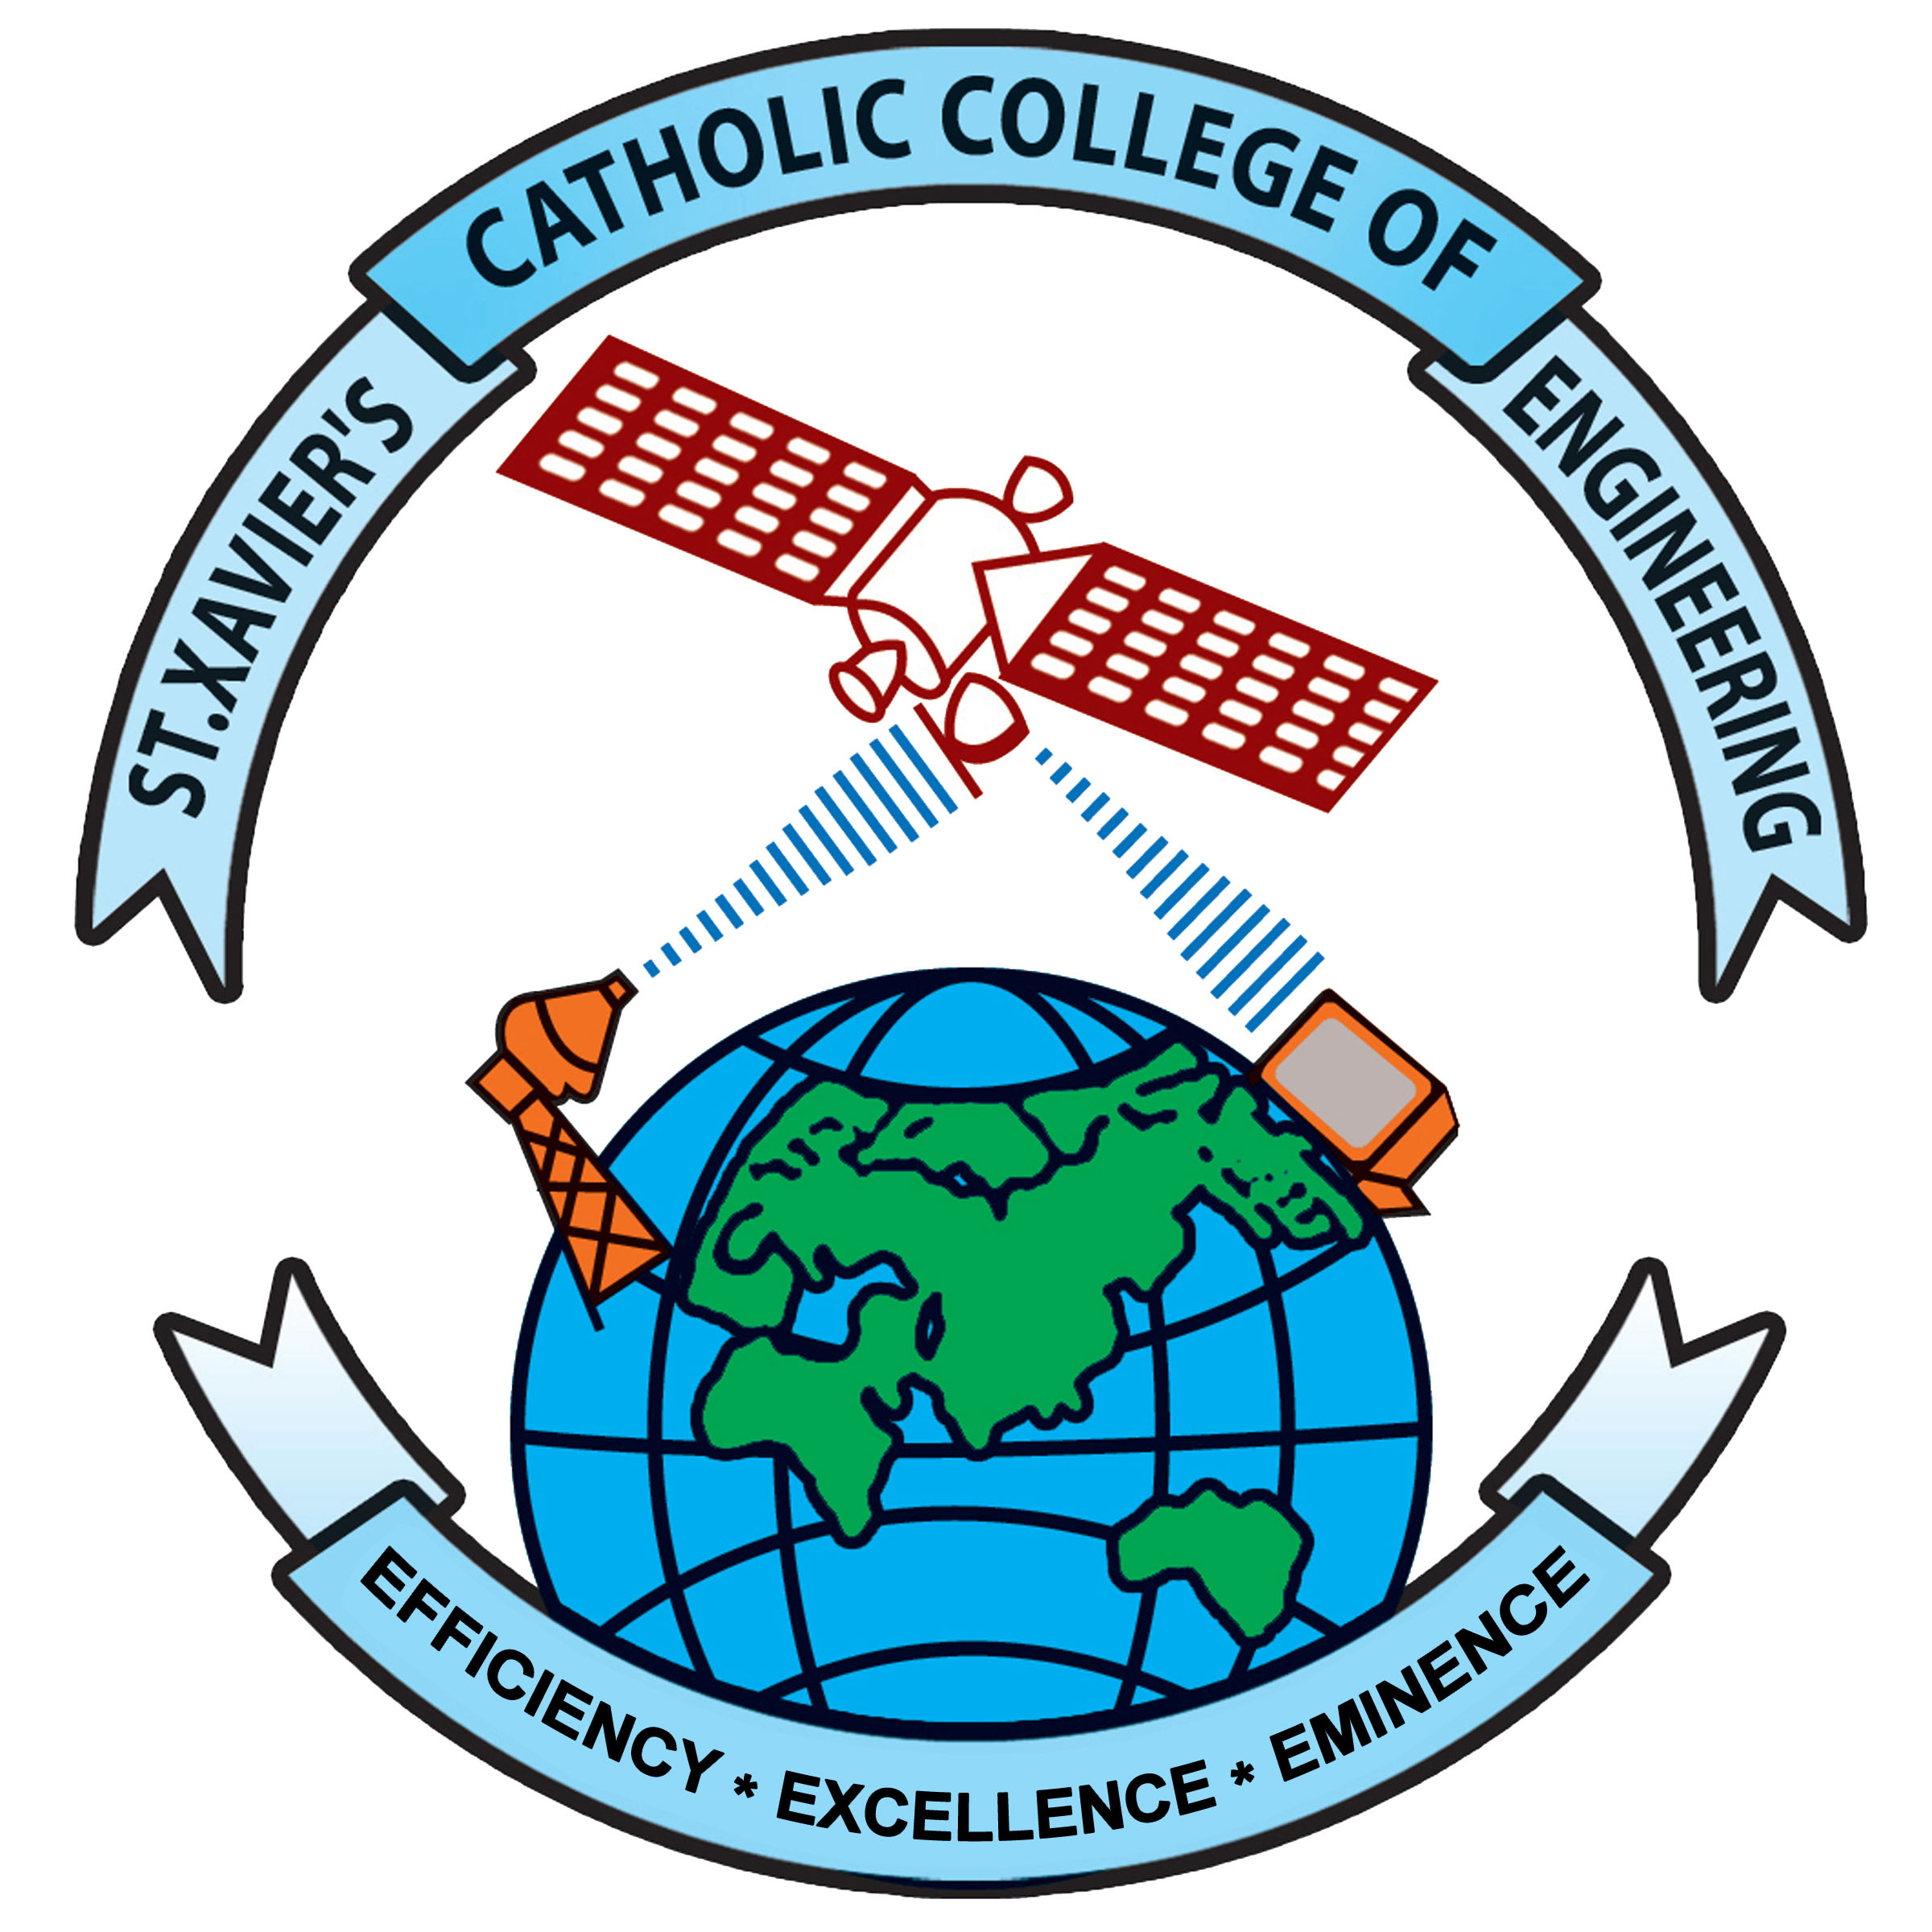 ST. XAVIERS CATHOLIC COLLEGE OF ENGINEERING